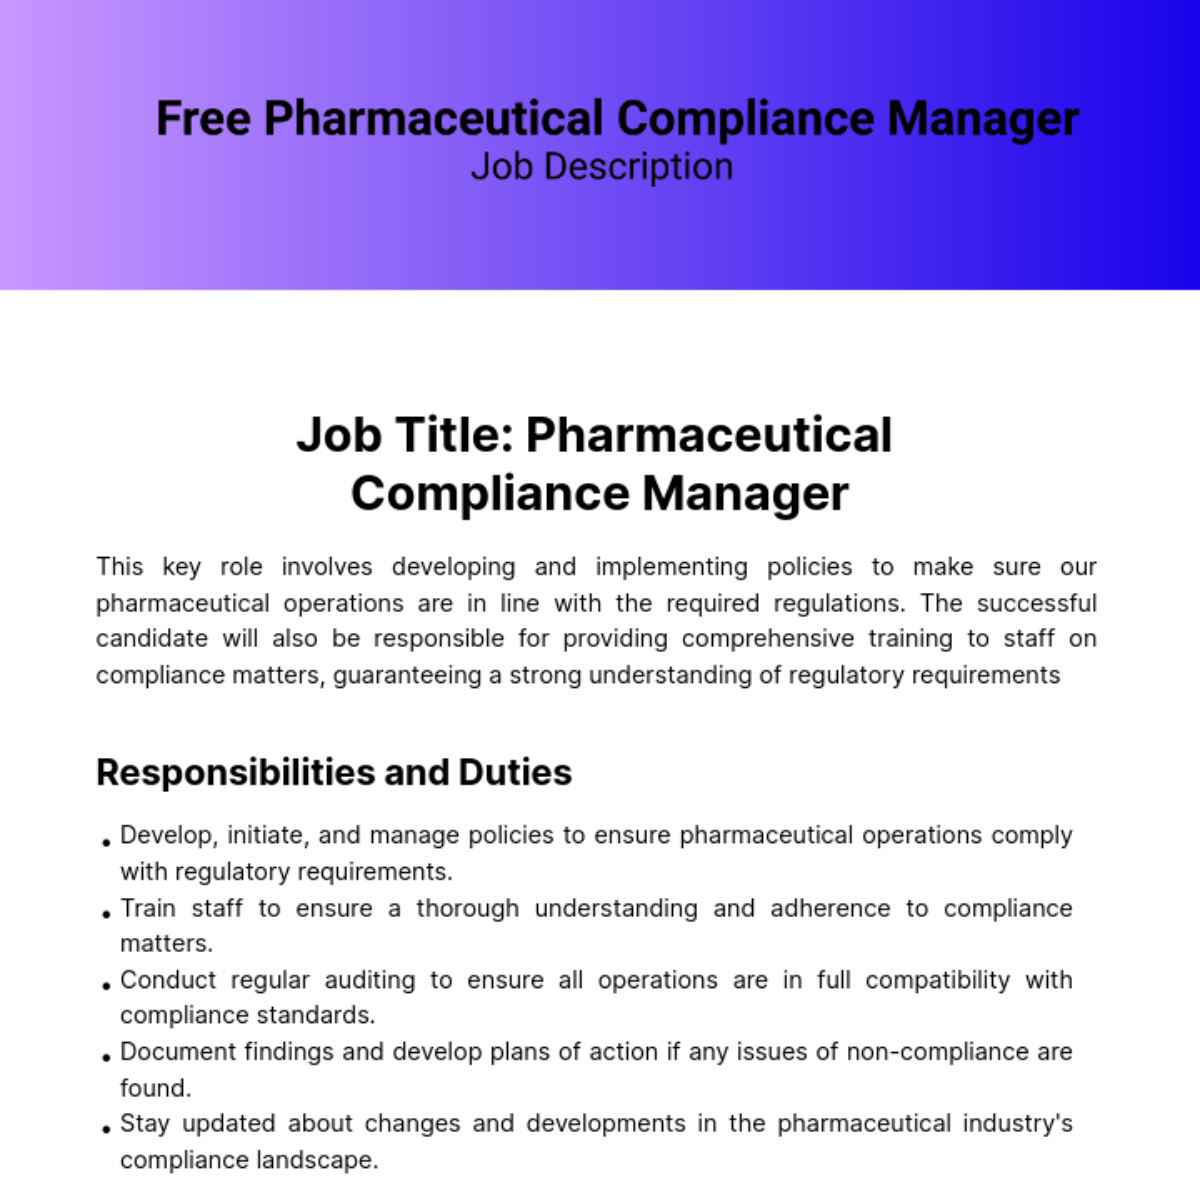 Free Pharmaceutical Compliance Manager Job Description Template